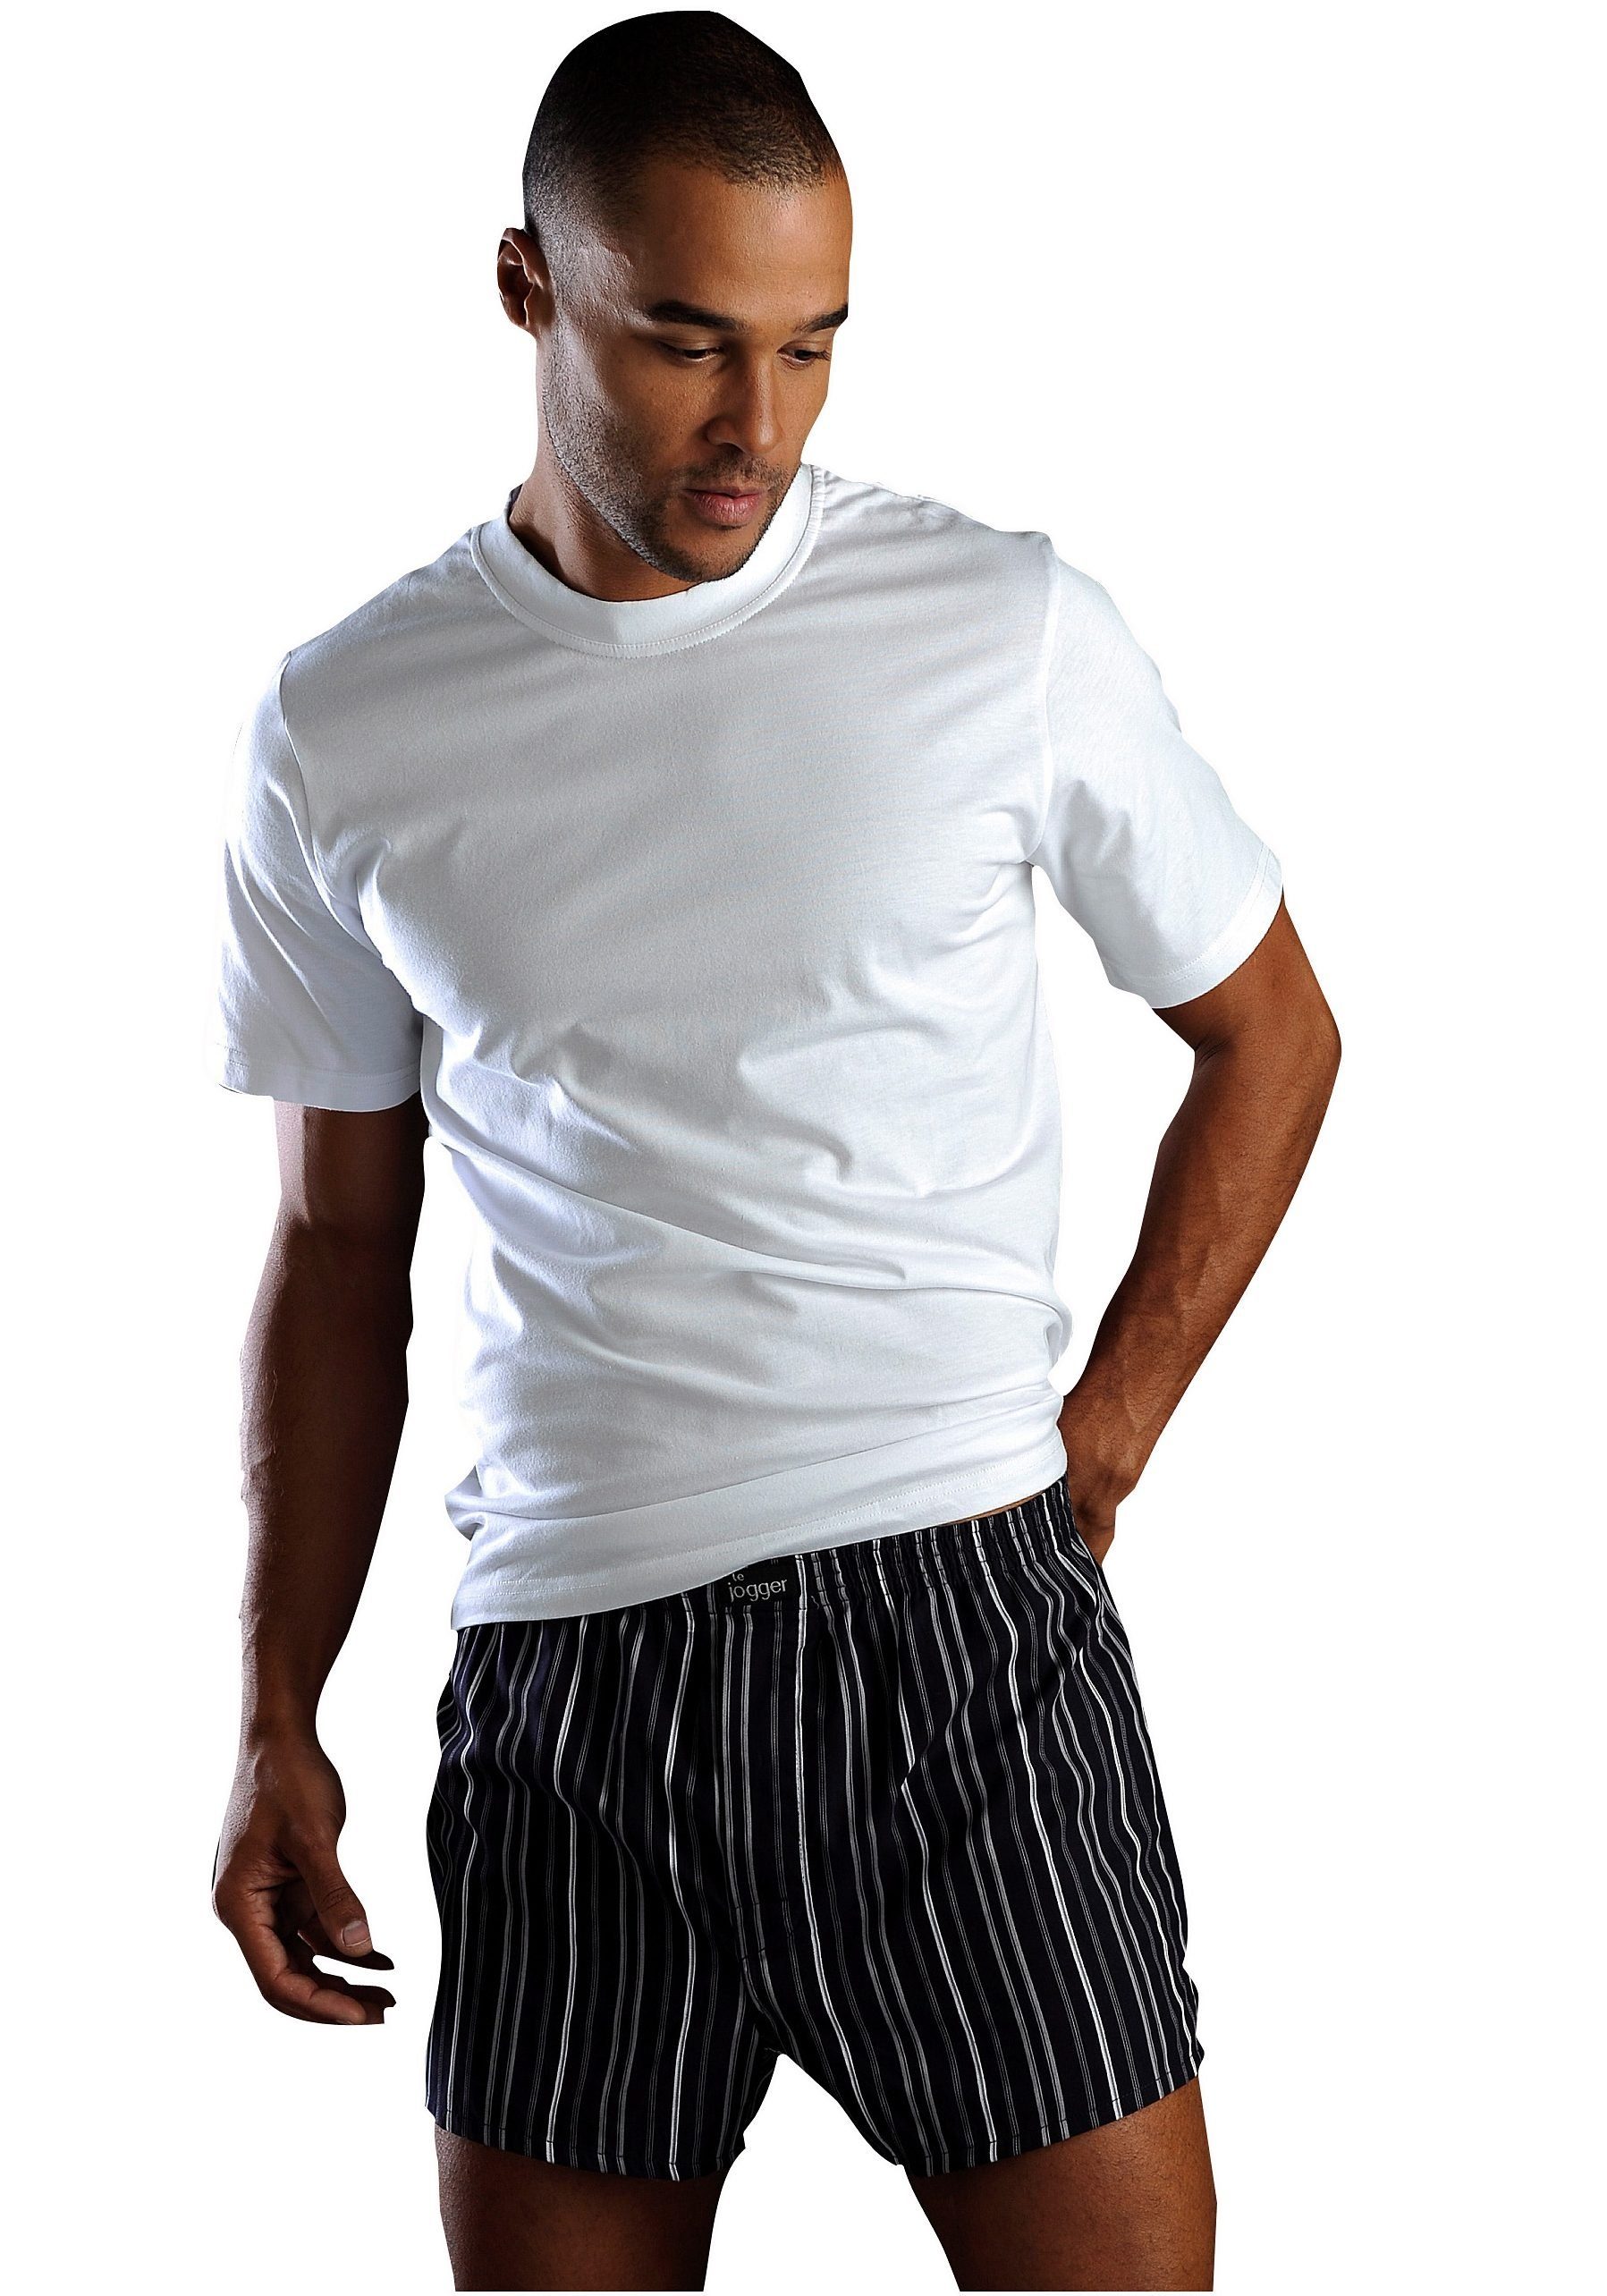 H.I.S T-Shirt aus Baumwolle schwarz weiß, perfekt grau-meliert, als (Packung, 3-tlg) Unterziehshirt